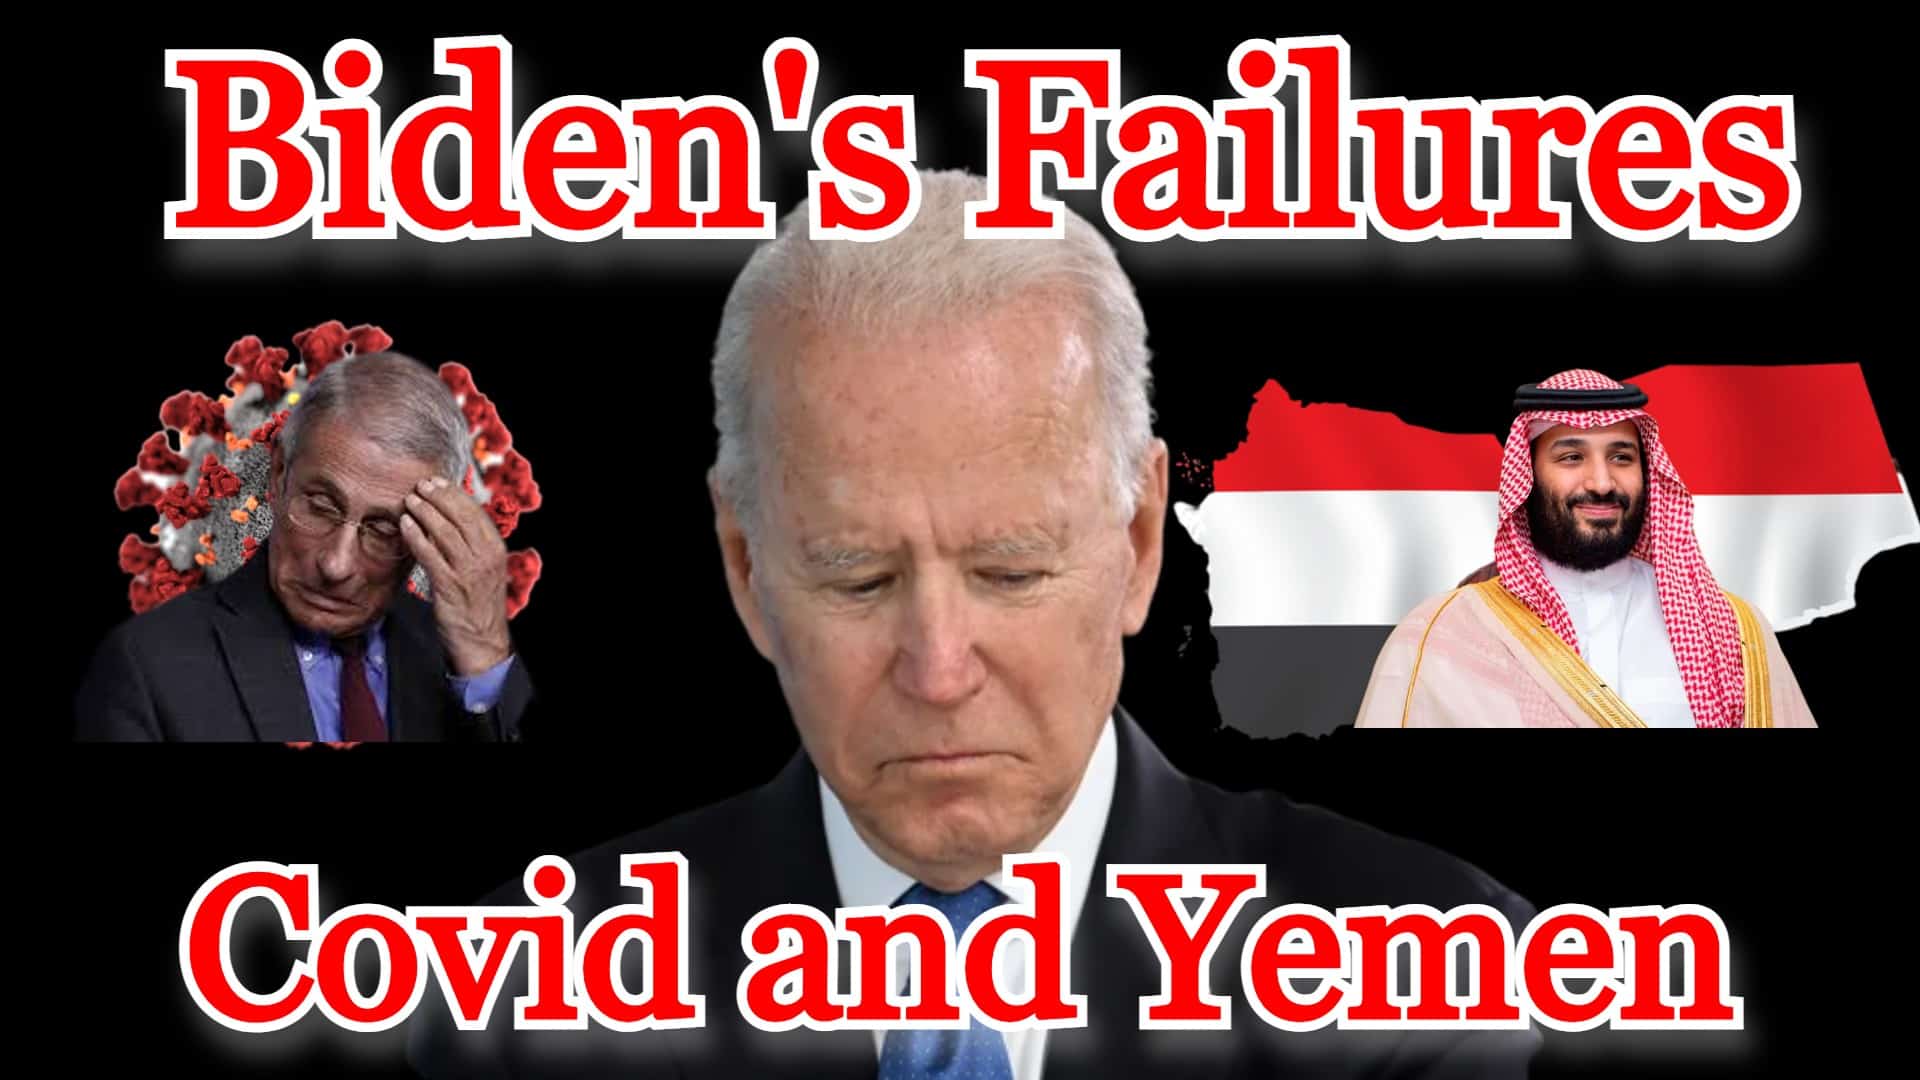 COI #205: Biden’s Failures on Covid and Yemen